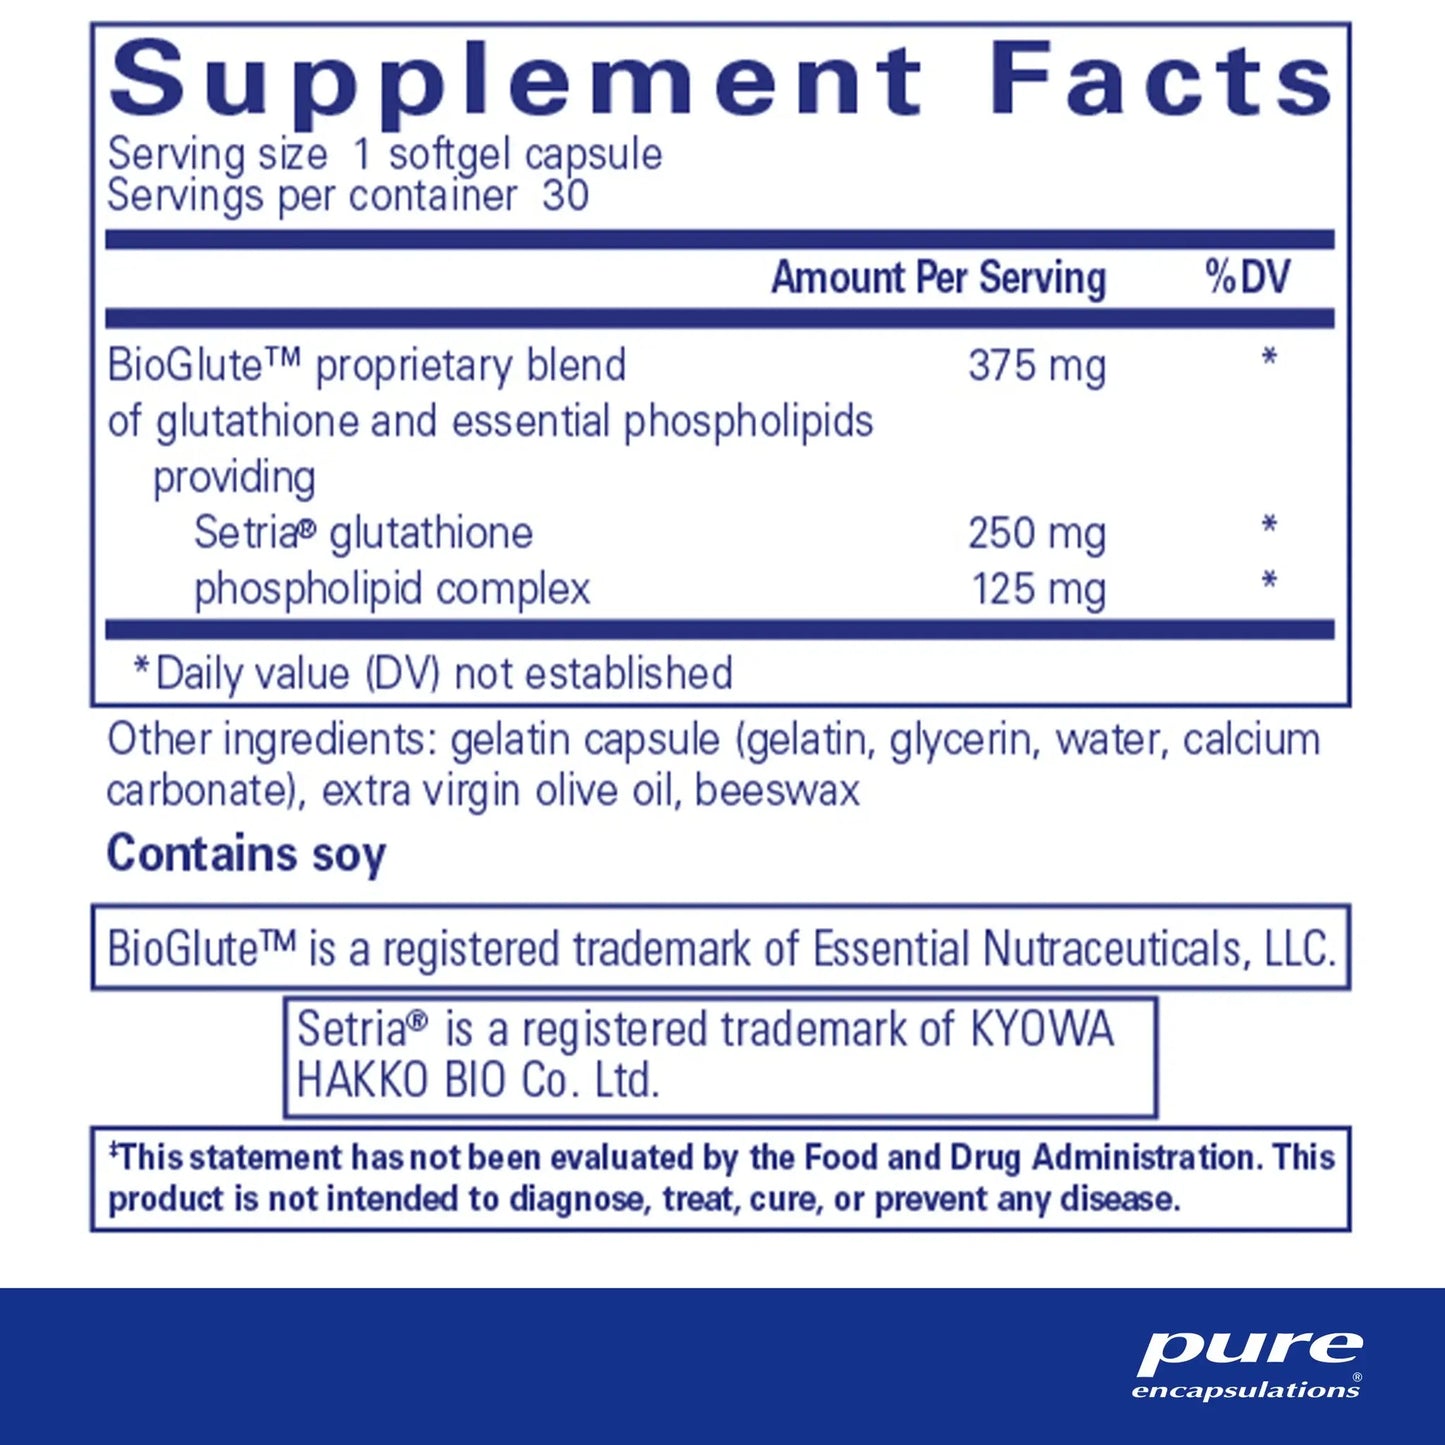 Pure Encapsulations Liposomal Glutathione Gelcaps